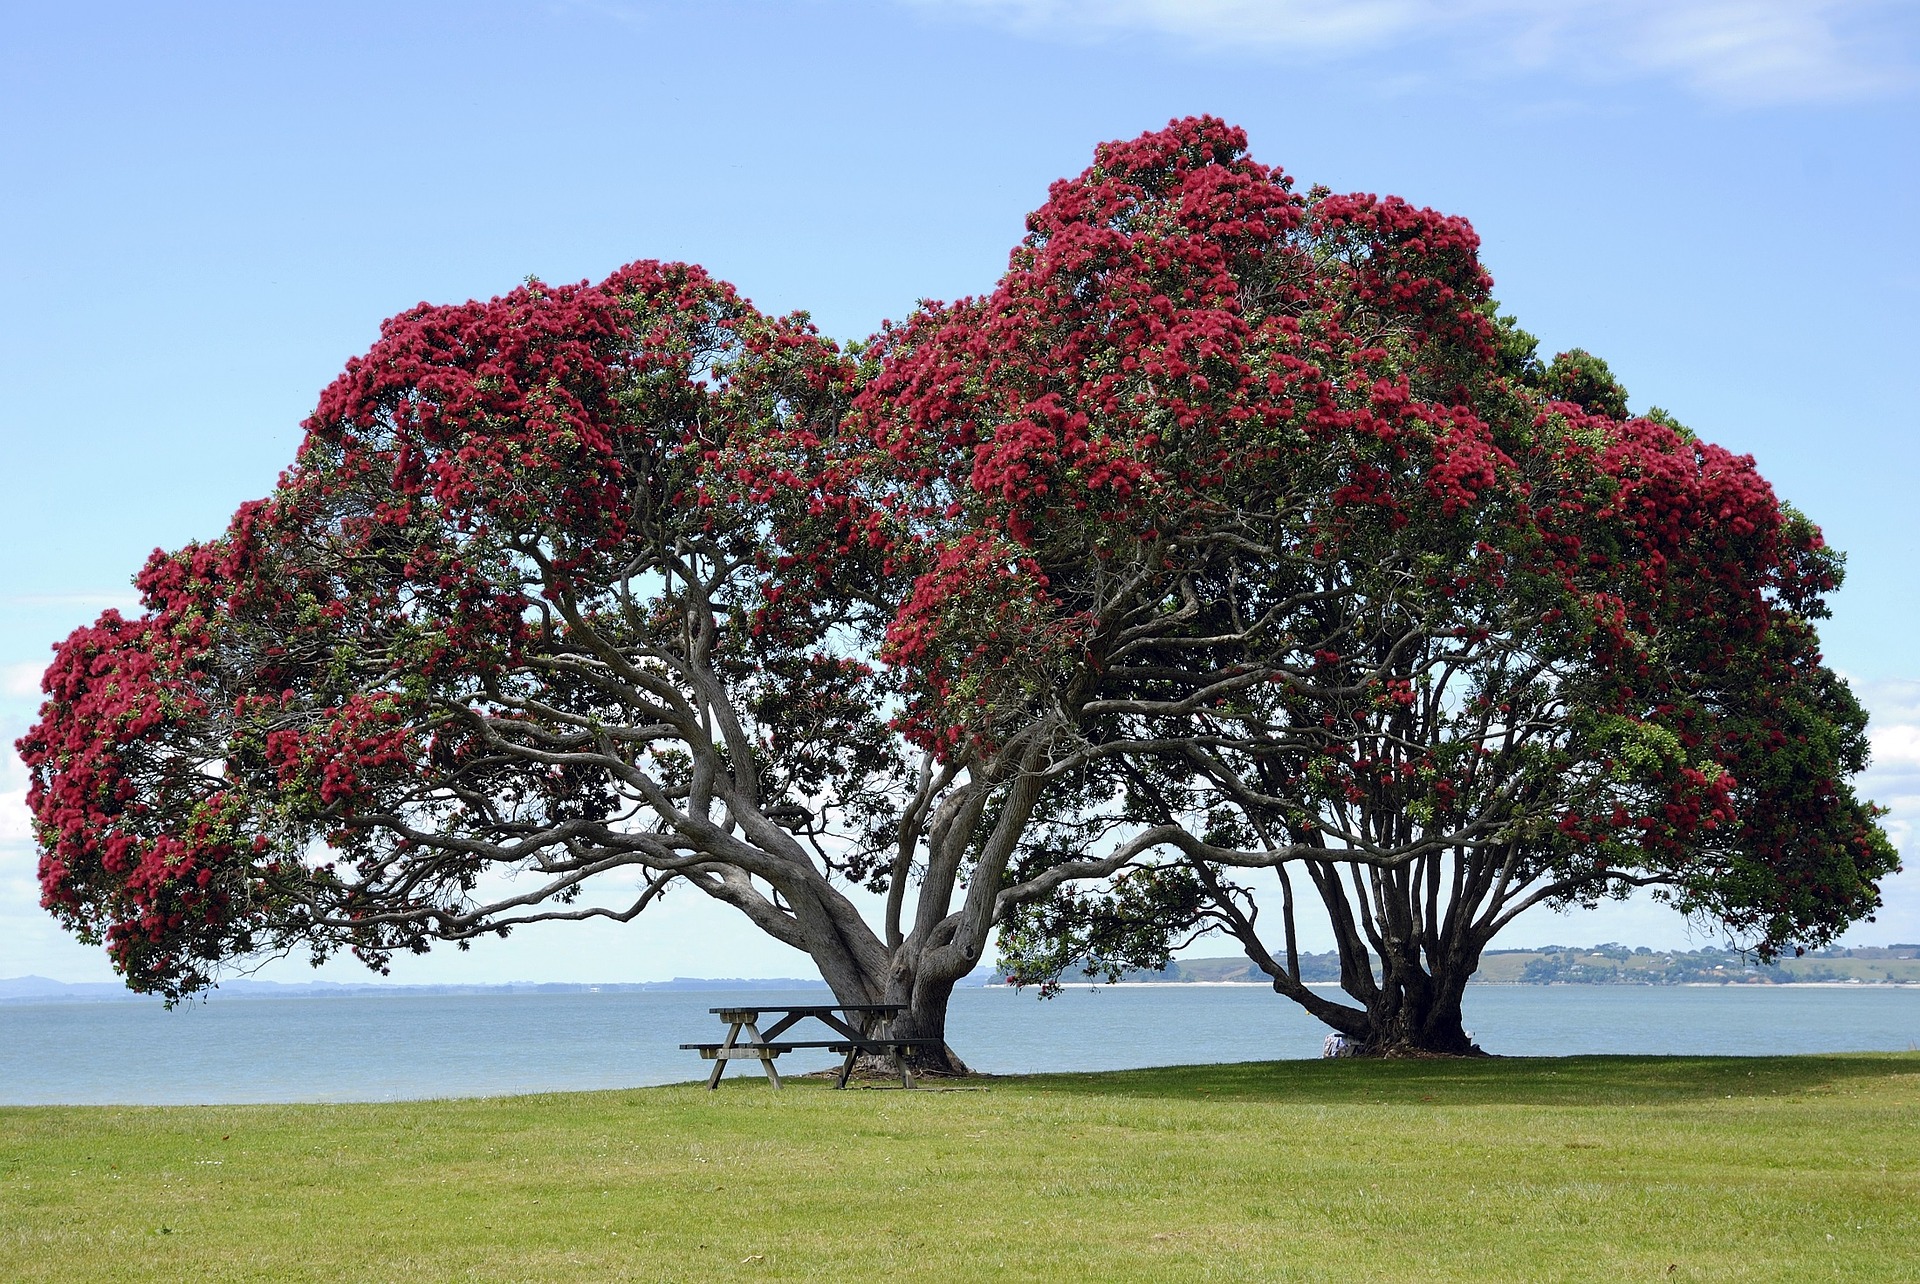 The Kiwi Christmas Tree – New Zealand's Pohutukawa | The Treeographer